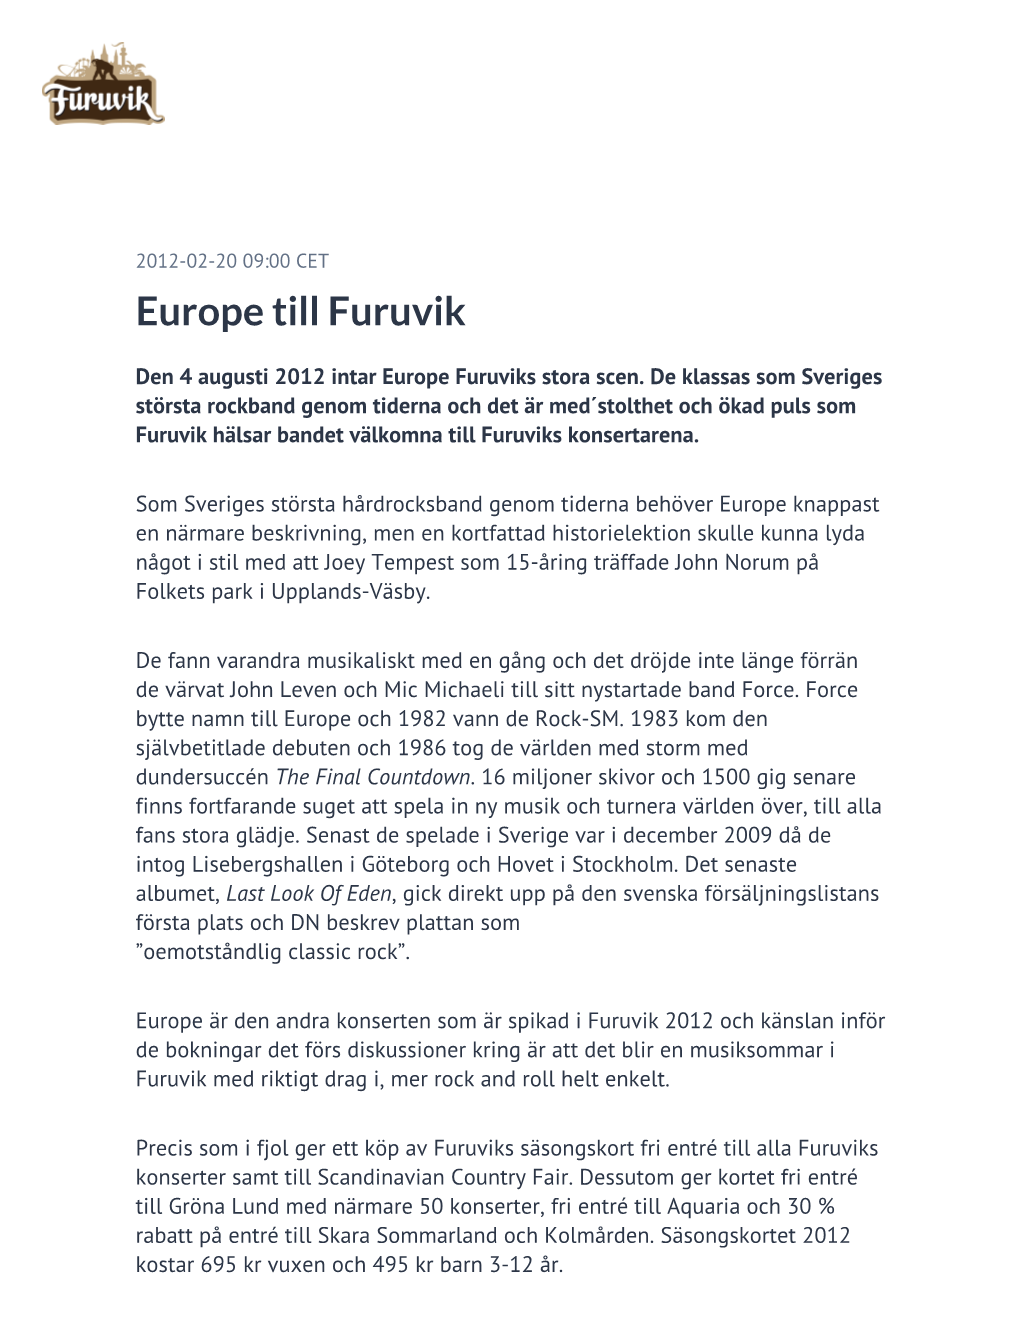 Europe Till Furuvik